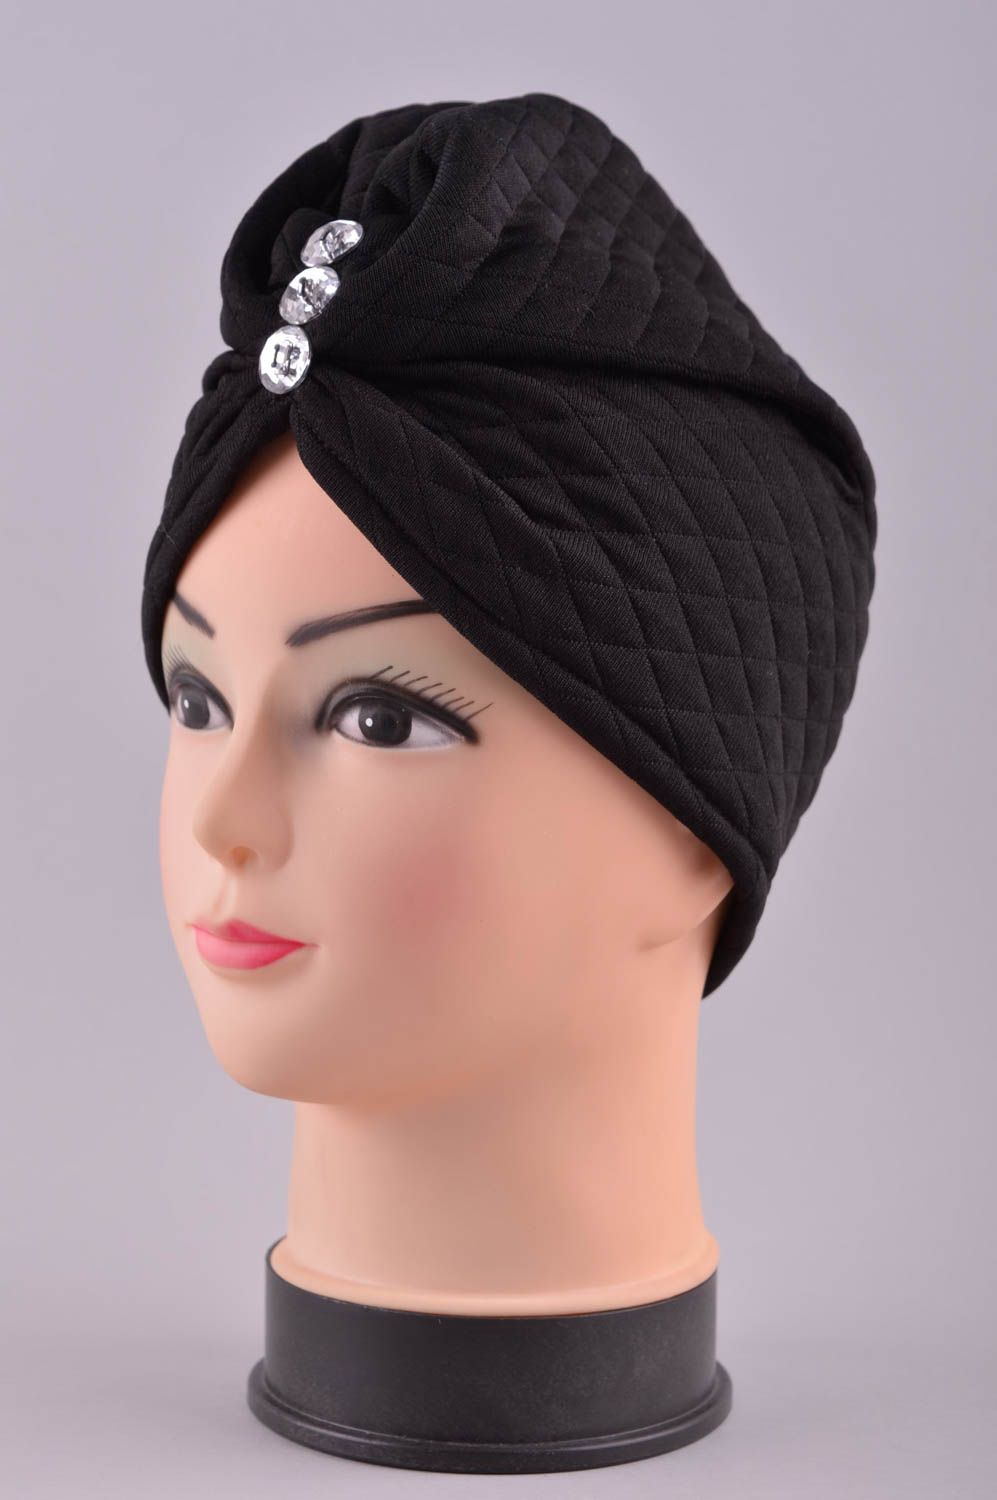 Handmade winter hat fabric hats black warm hat winter accessories for women photo 1